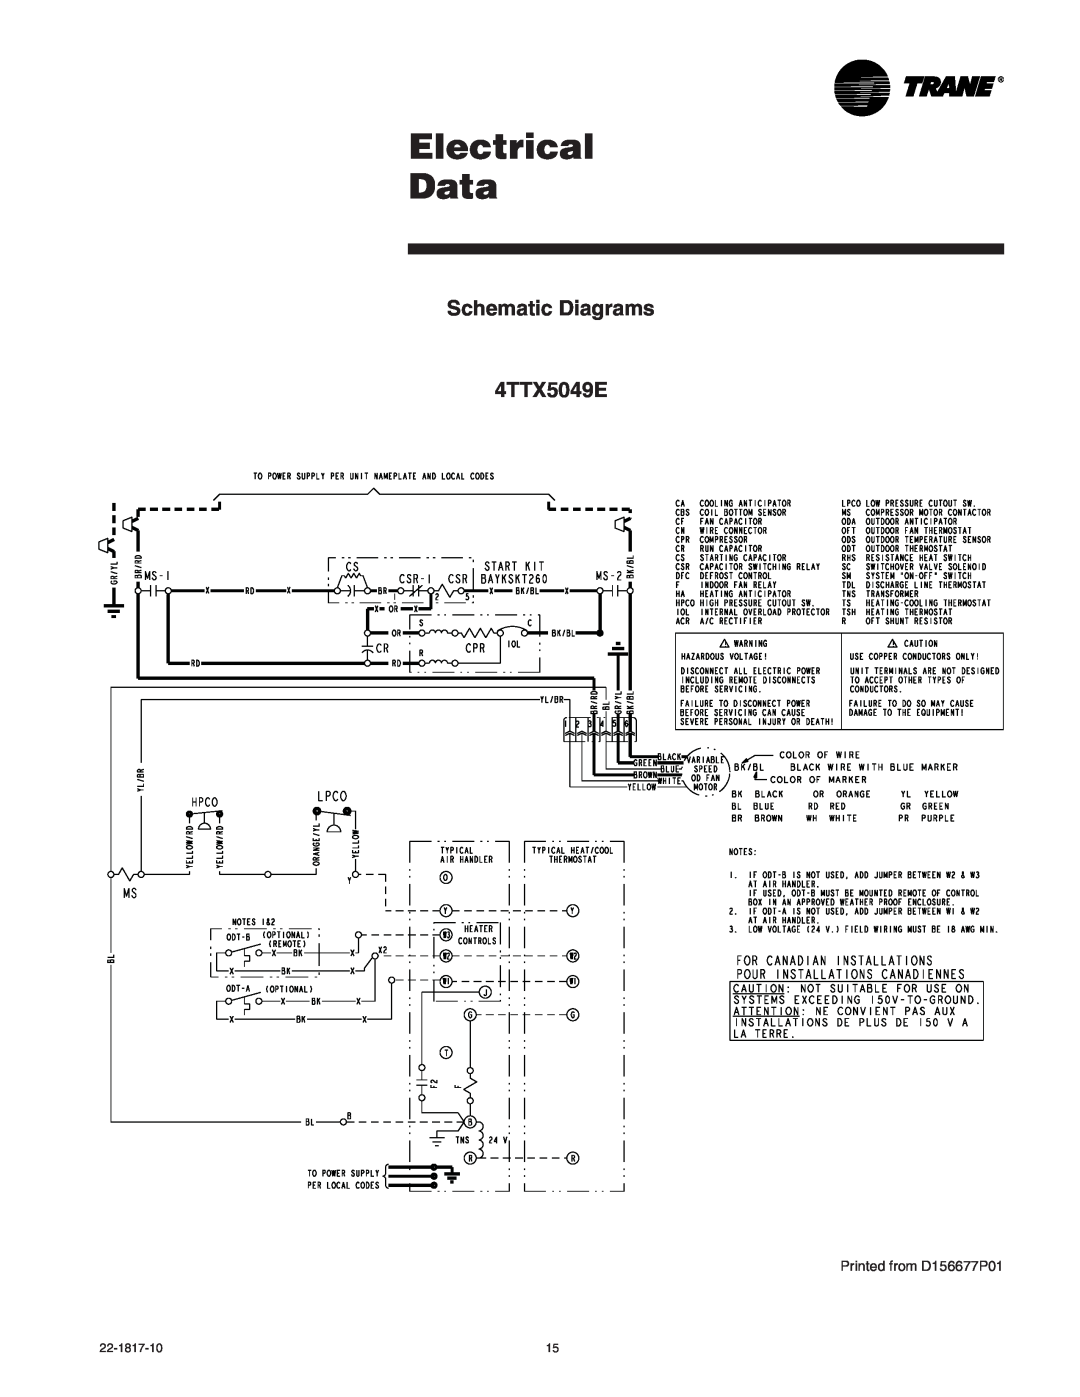 Trane 4TTX5061E, 4TTX5060A1, 4TTX5036A1 manual Electrical Data, Schematic Diagrams 4TTX5049E, Printed from D156677P01 